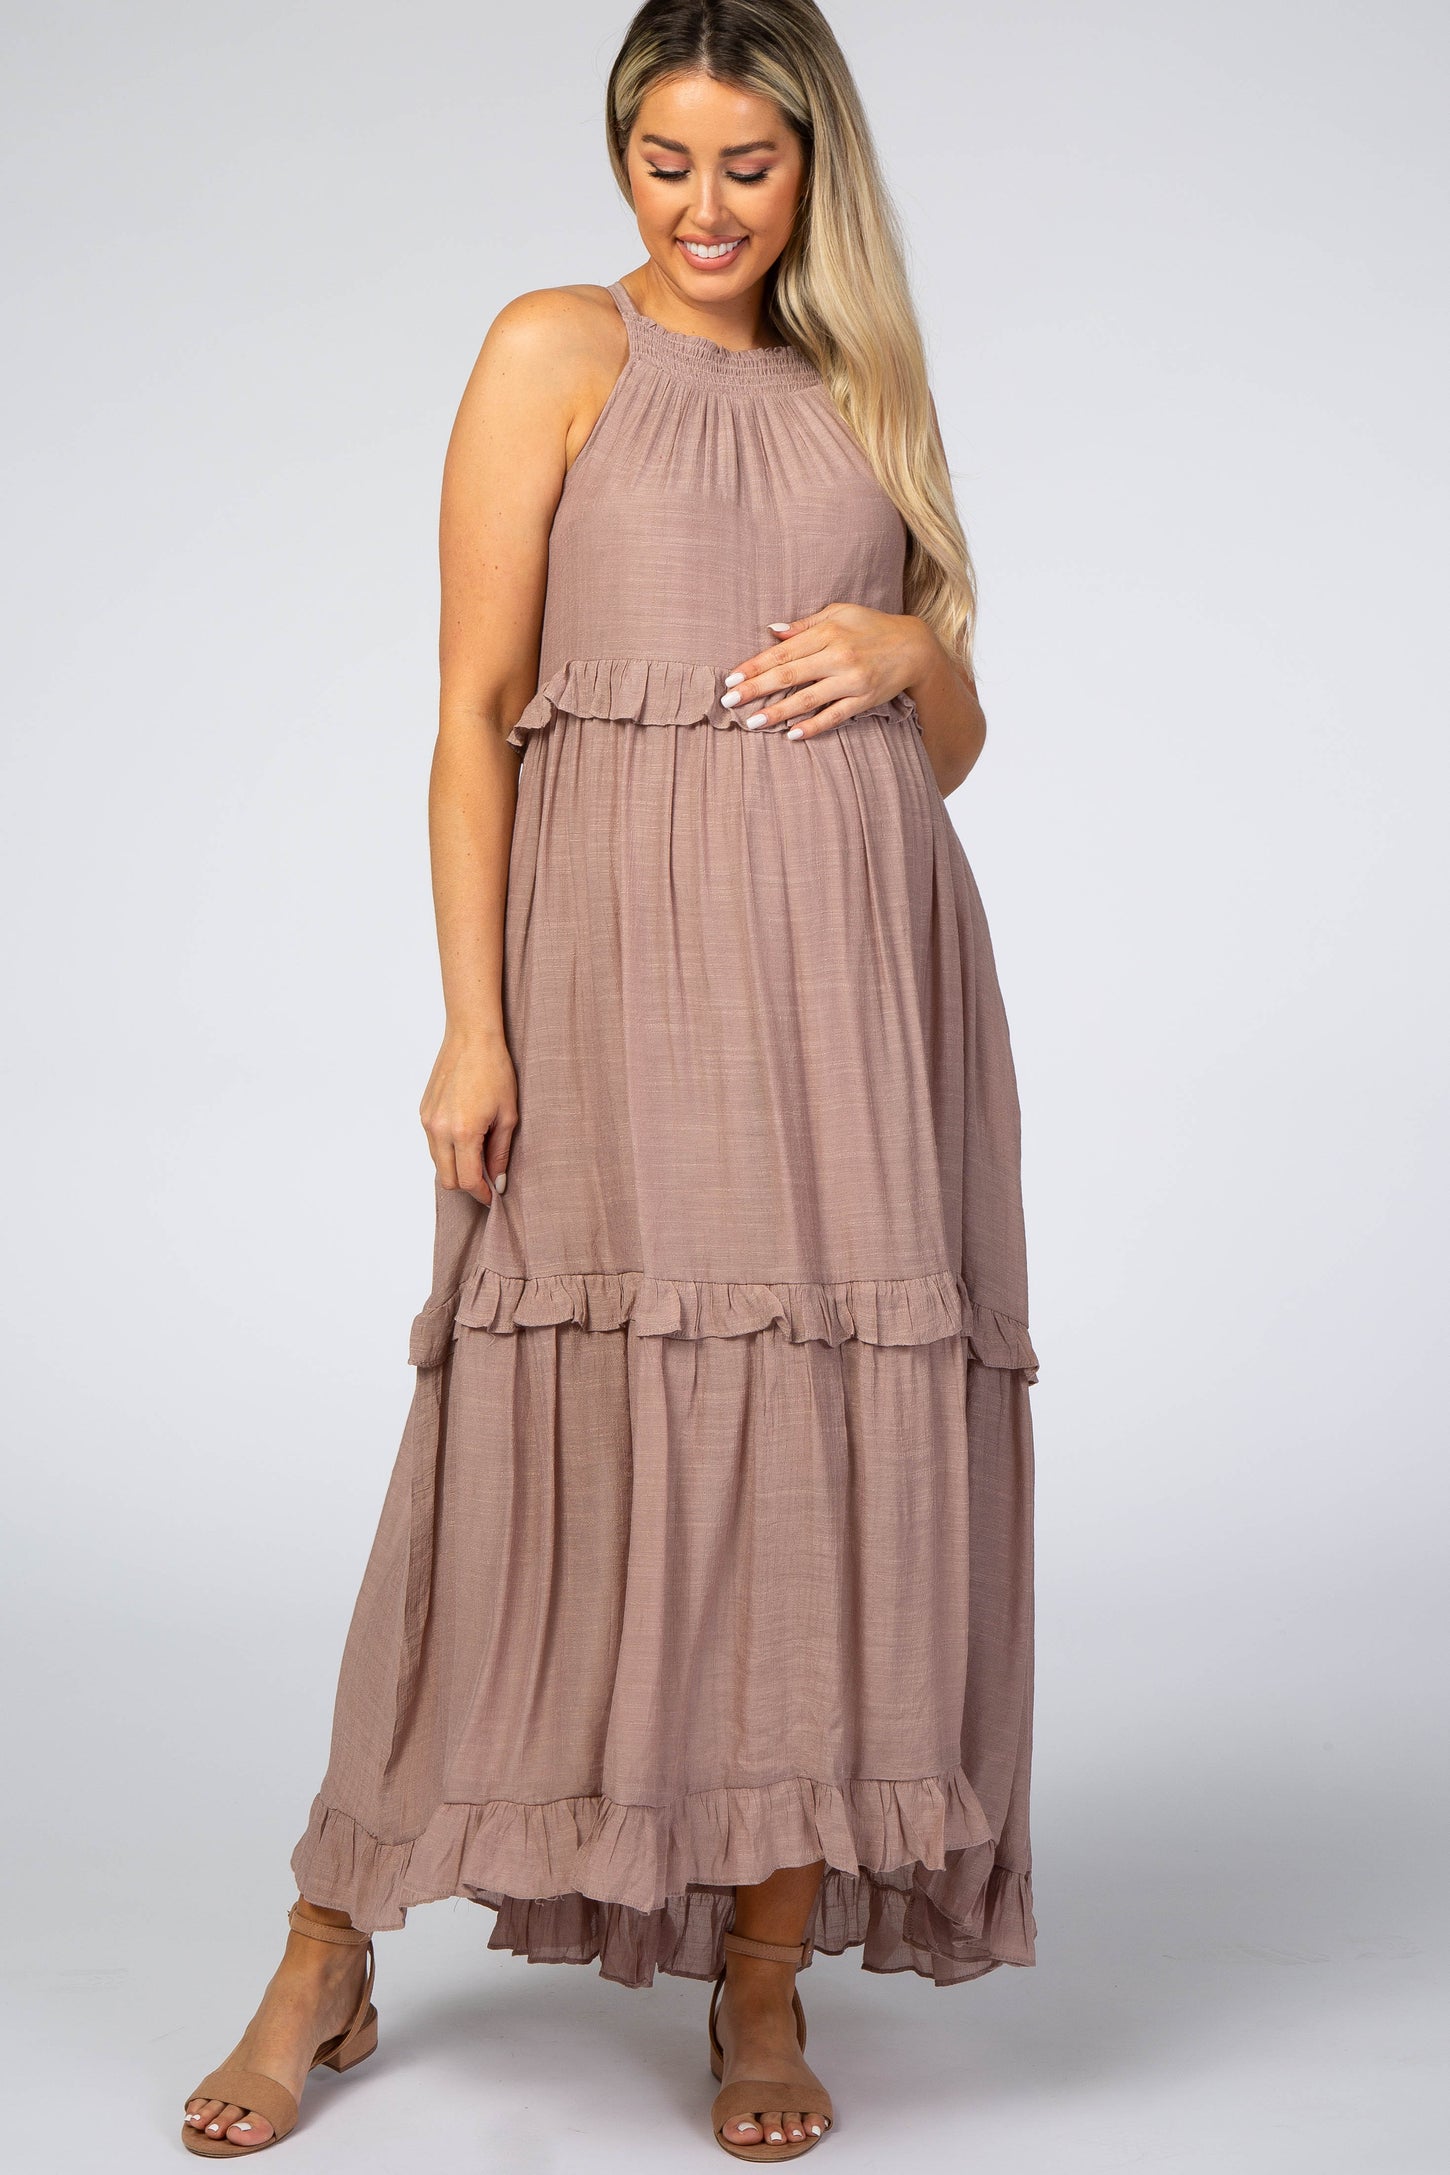 Fuchsia Off Shoulder Ruffle Trim Maternity Maxi Dress– PinkBlush